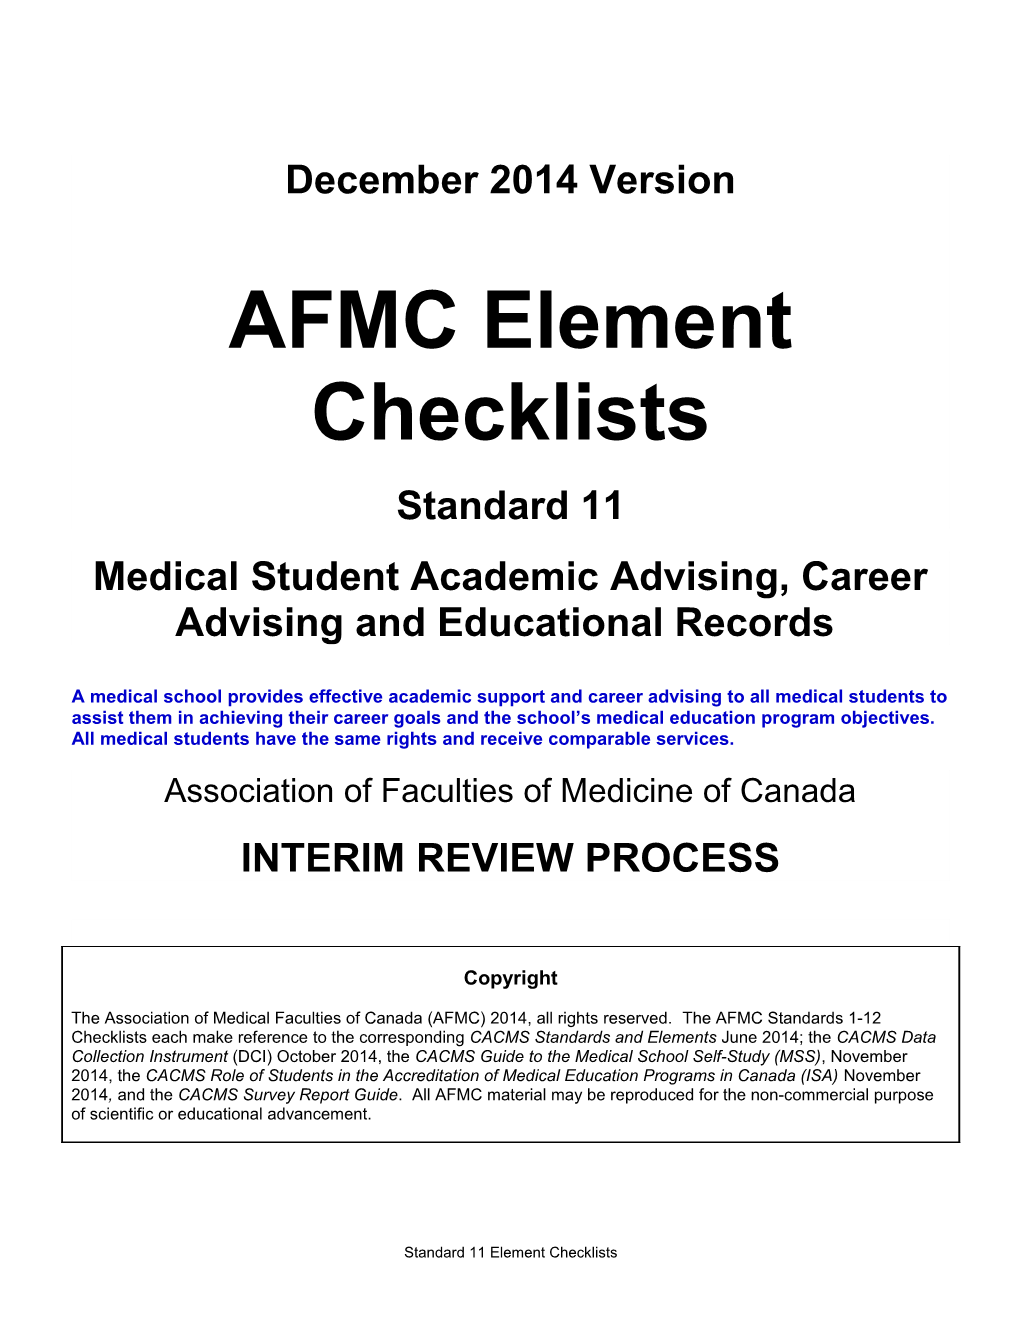 Afmc Interim Review Process